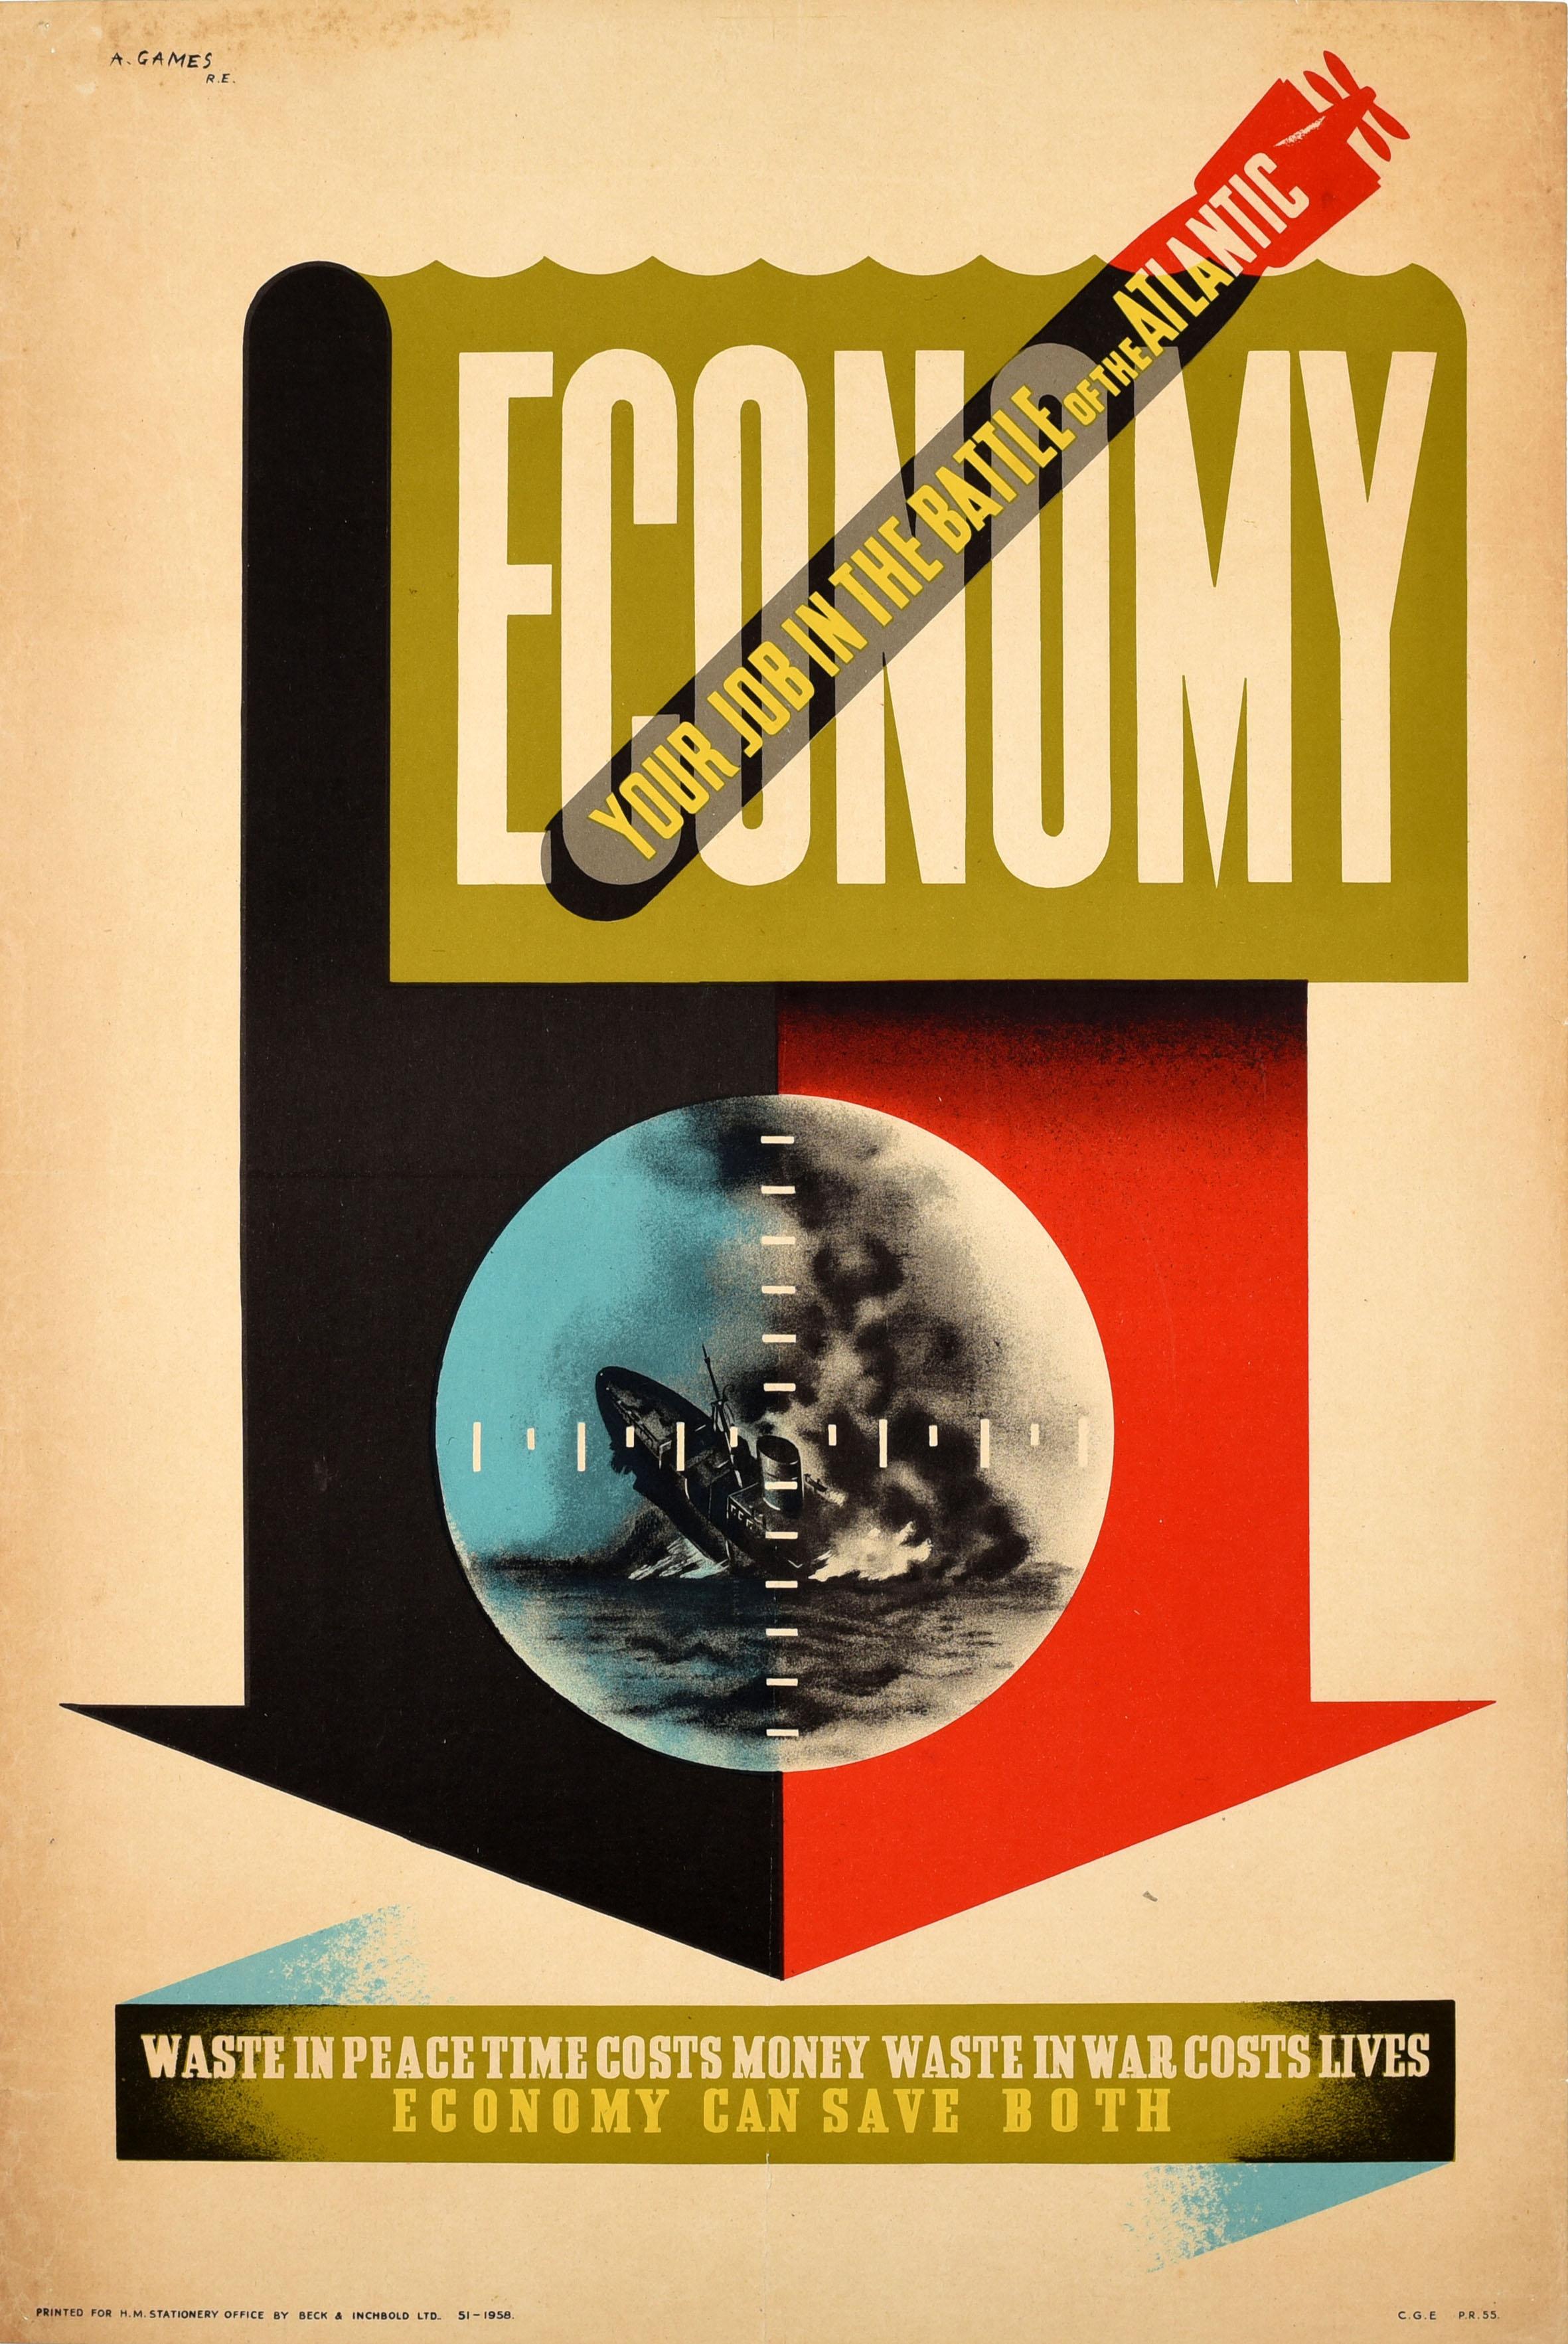 Abram Games Print - Original Vintage WWII Poster Economy Save Waste Peace War Battle Of The Atlantic